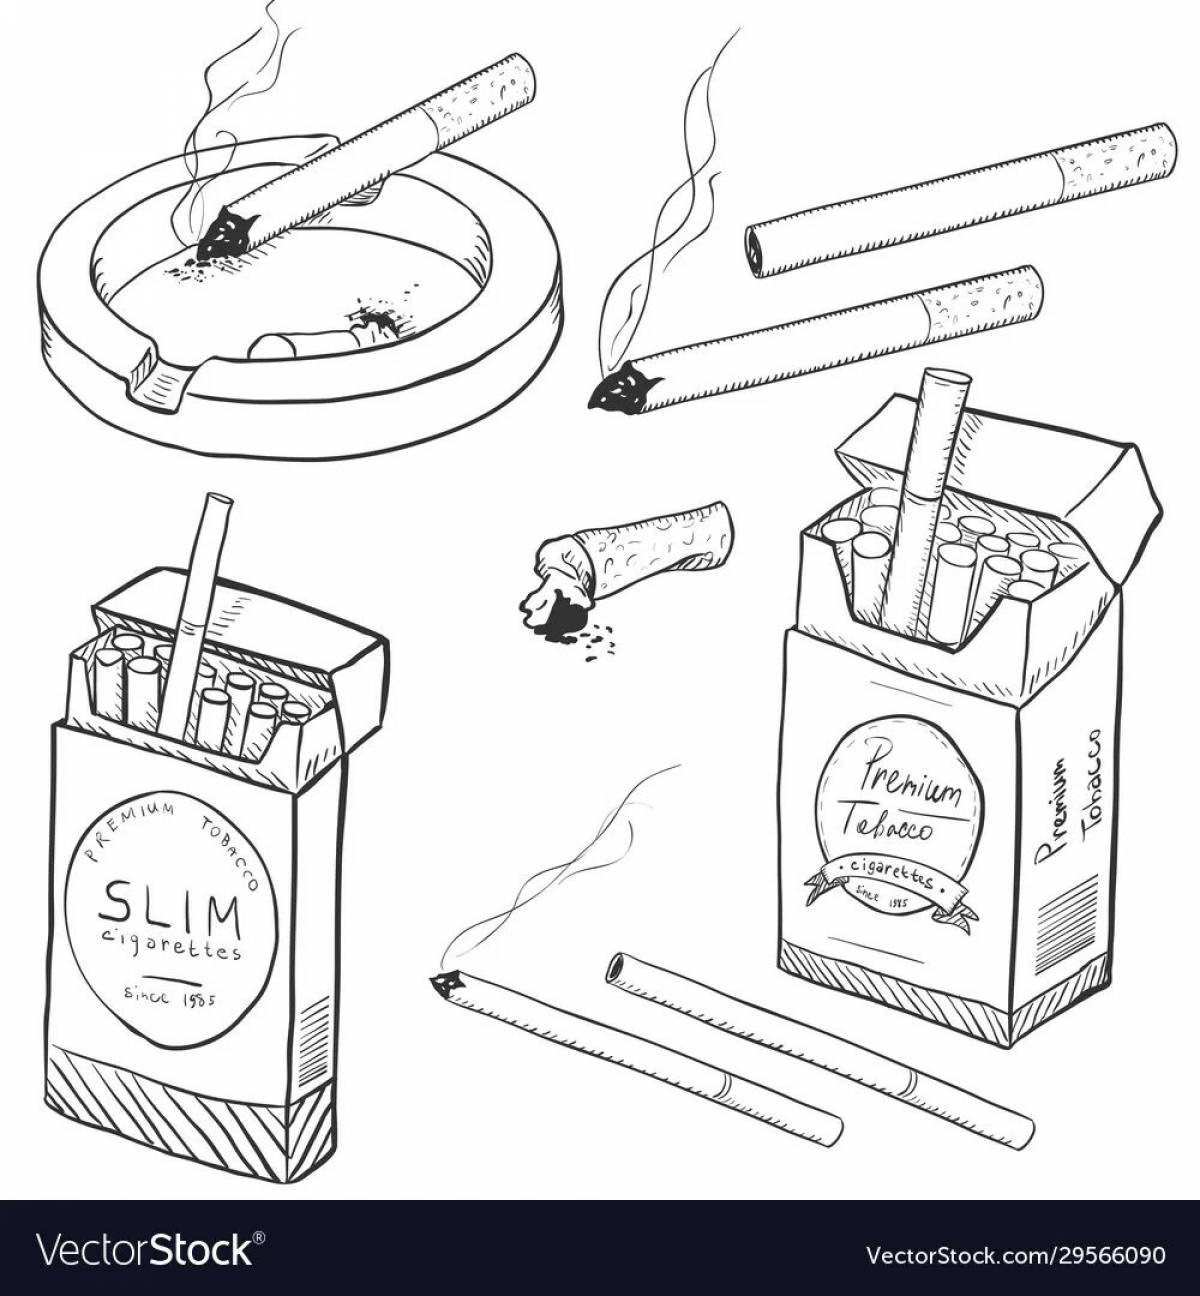 Сигареты #9